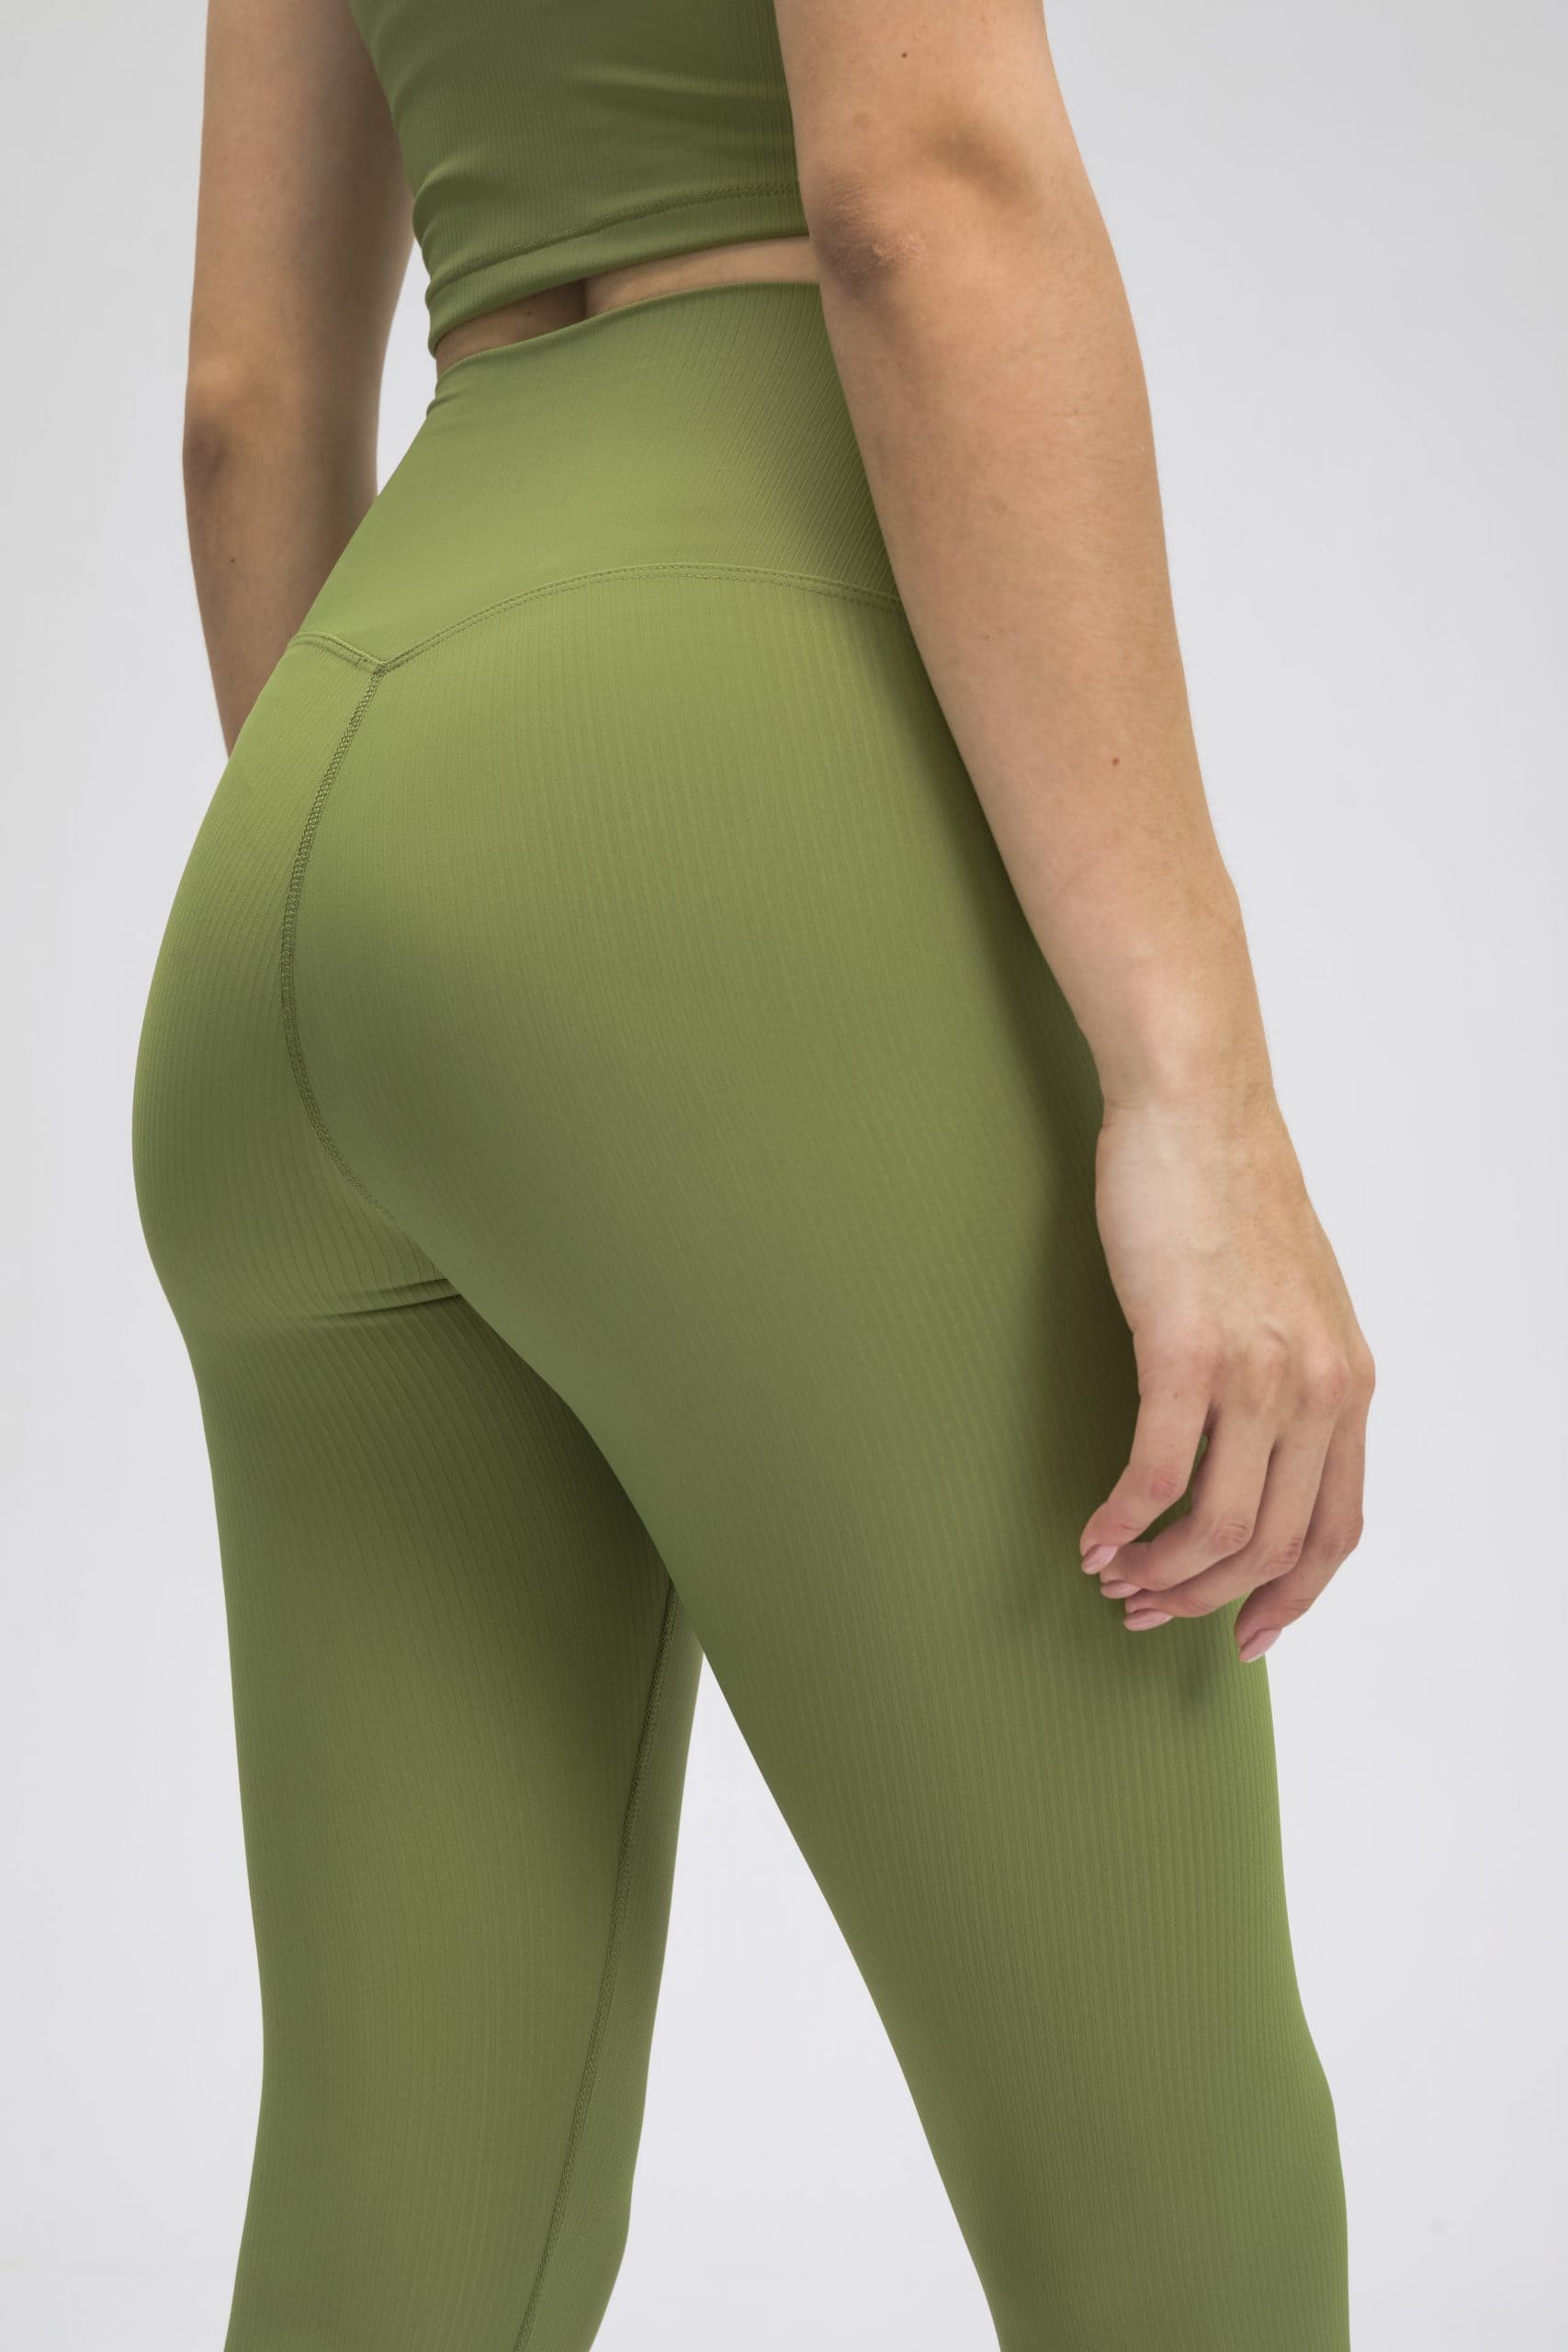 Comfortable Yoga Pants at Cheap Prices - Alibaba.com